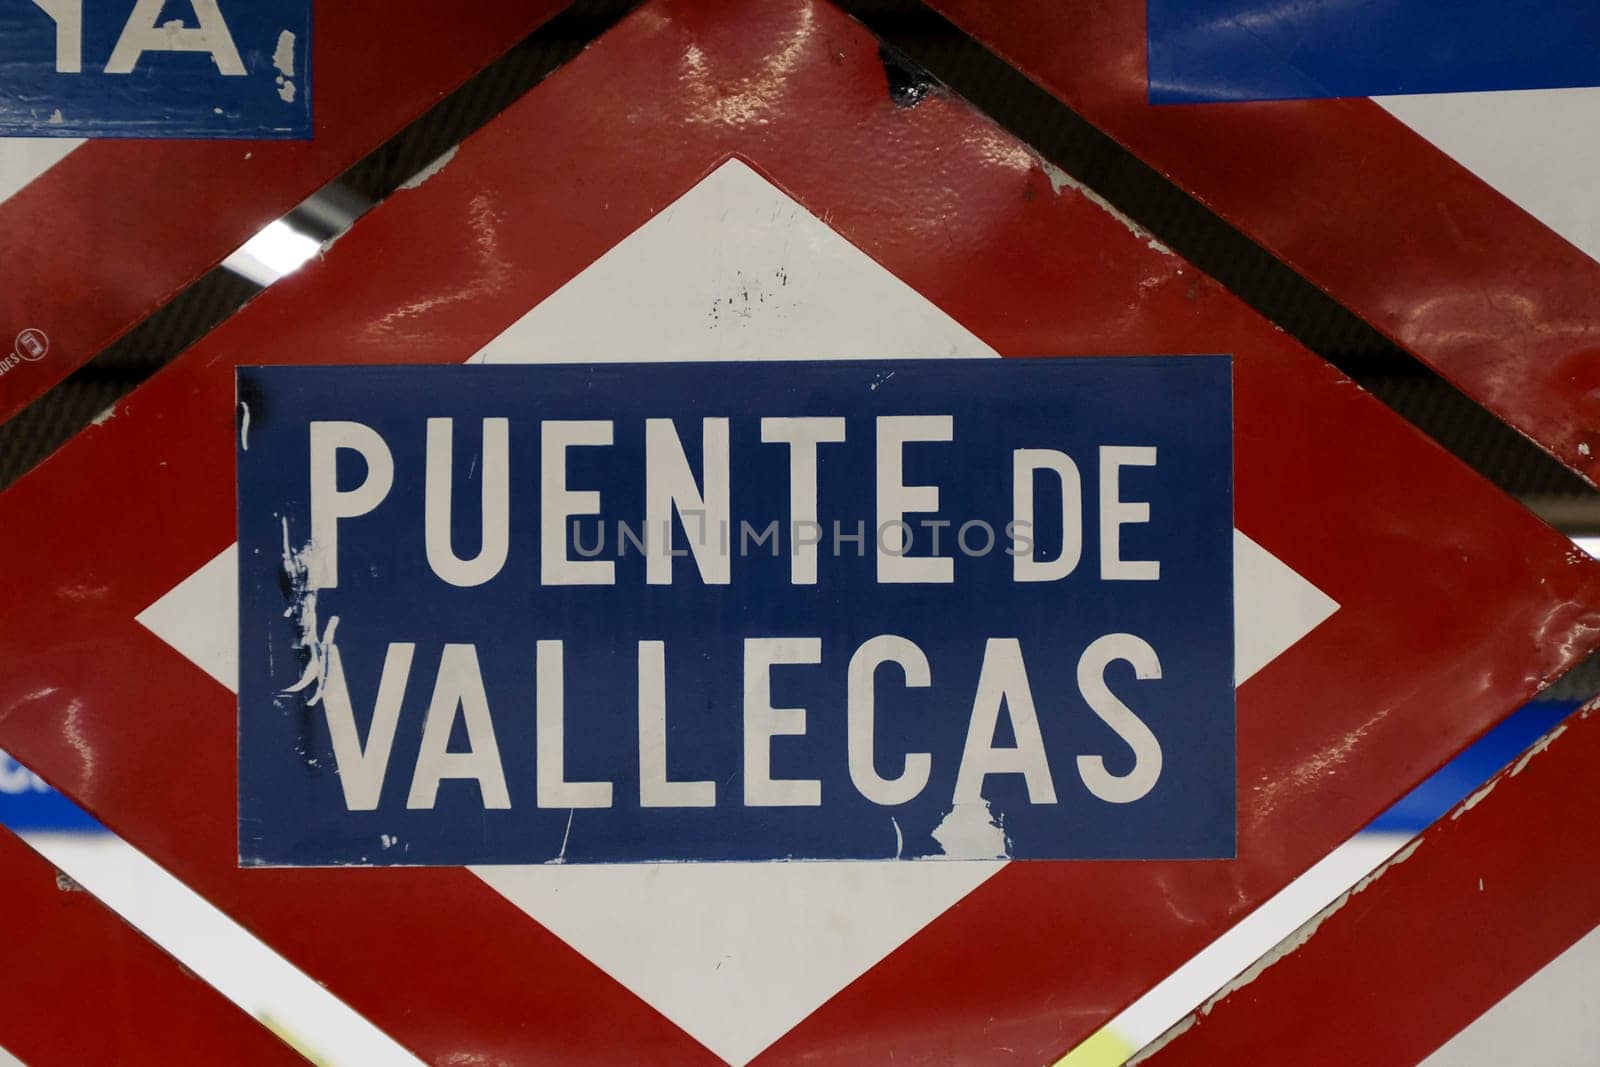 Metro Station Sign in Madrid Spain puente de vallecas by AndreaIzzotti